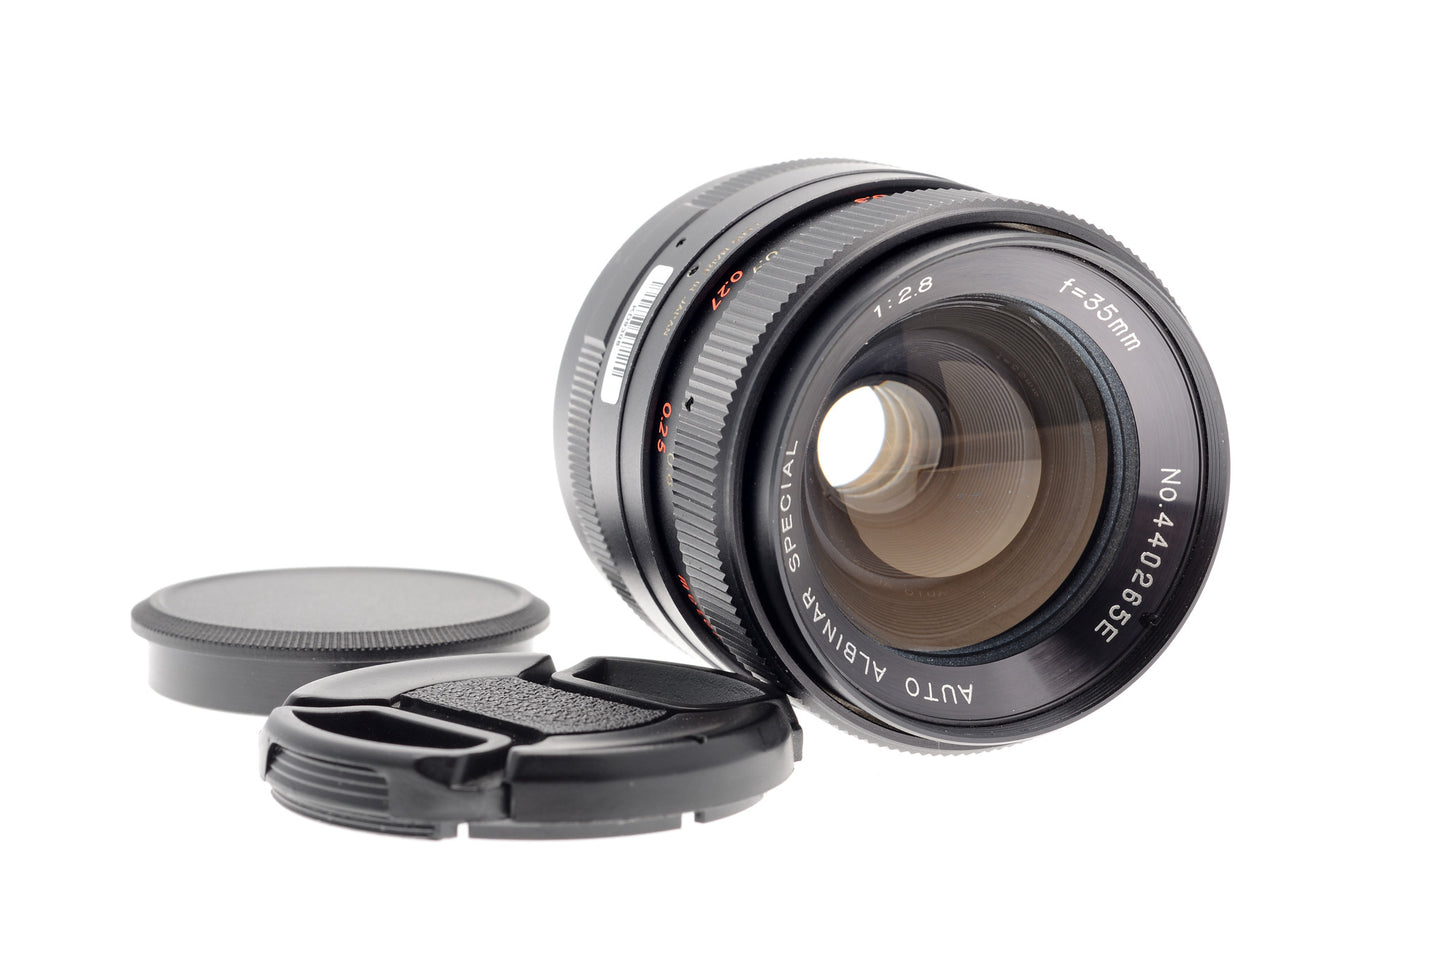 Albinar 35mm f2.8 Auto Special - Lens